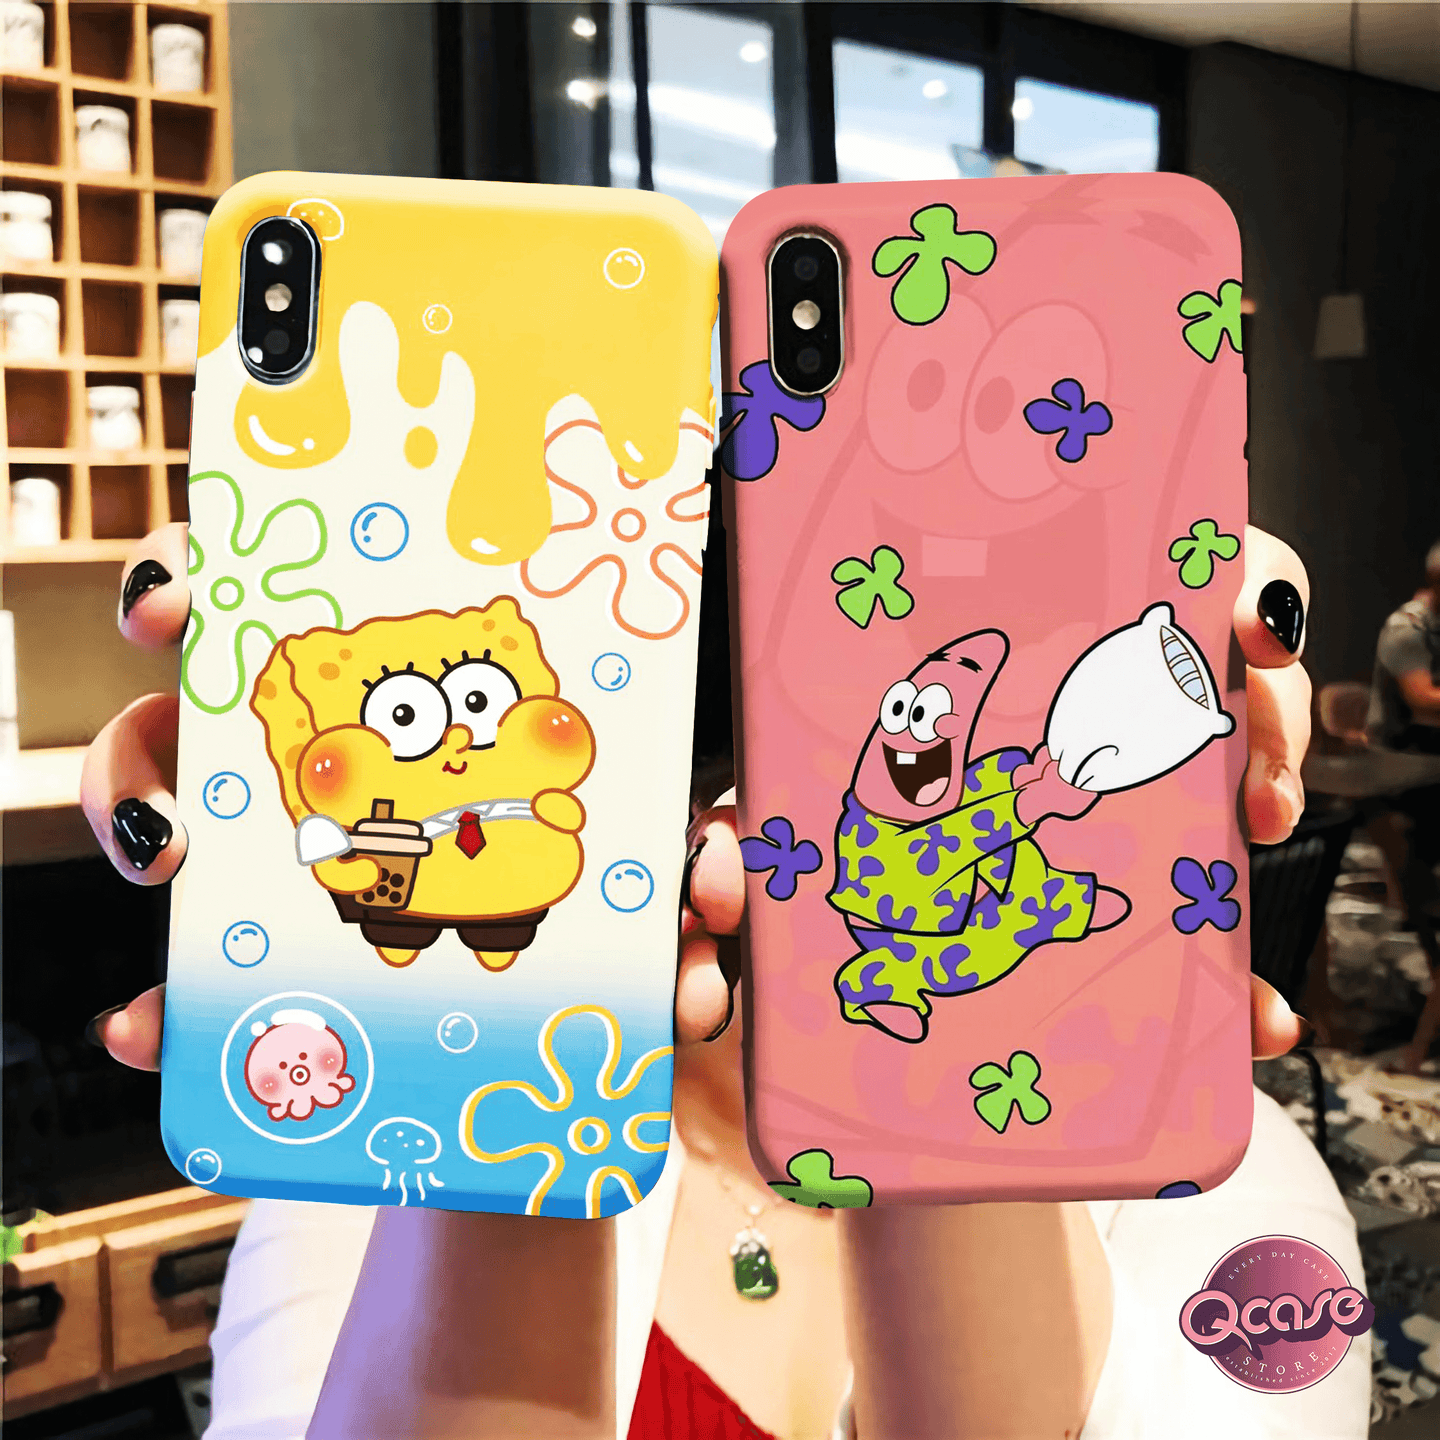 Spongebob phone cover and Baseet